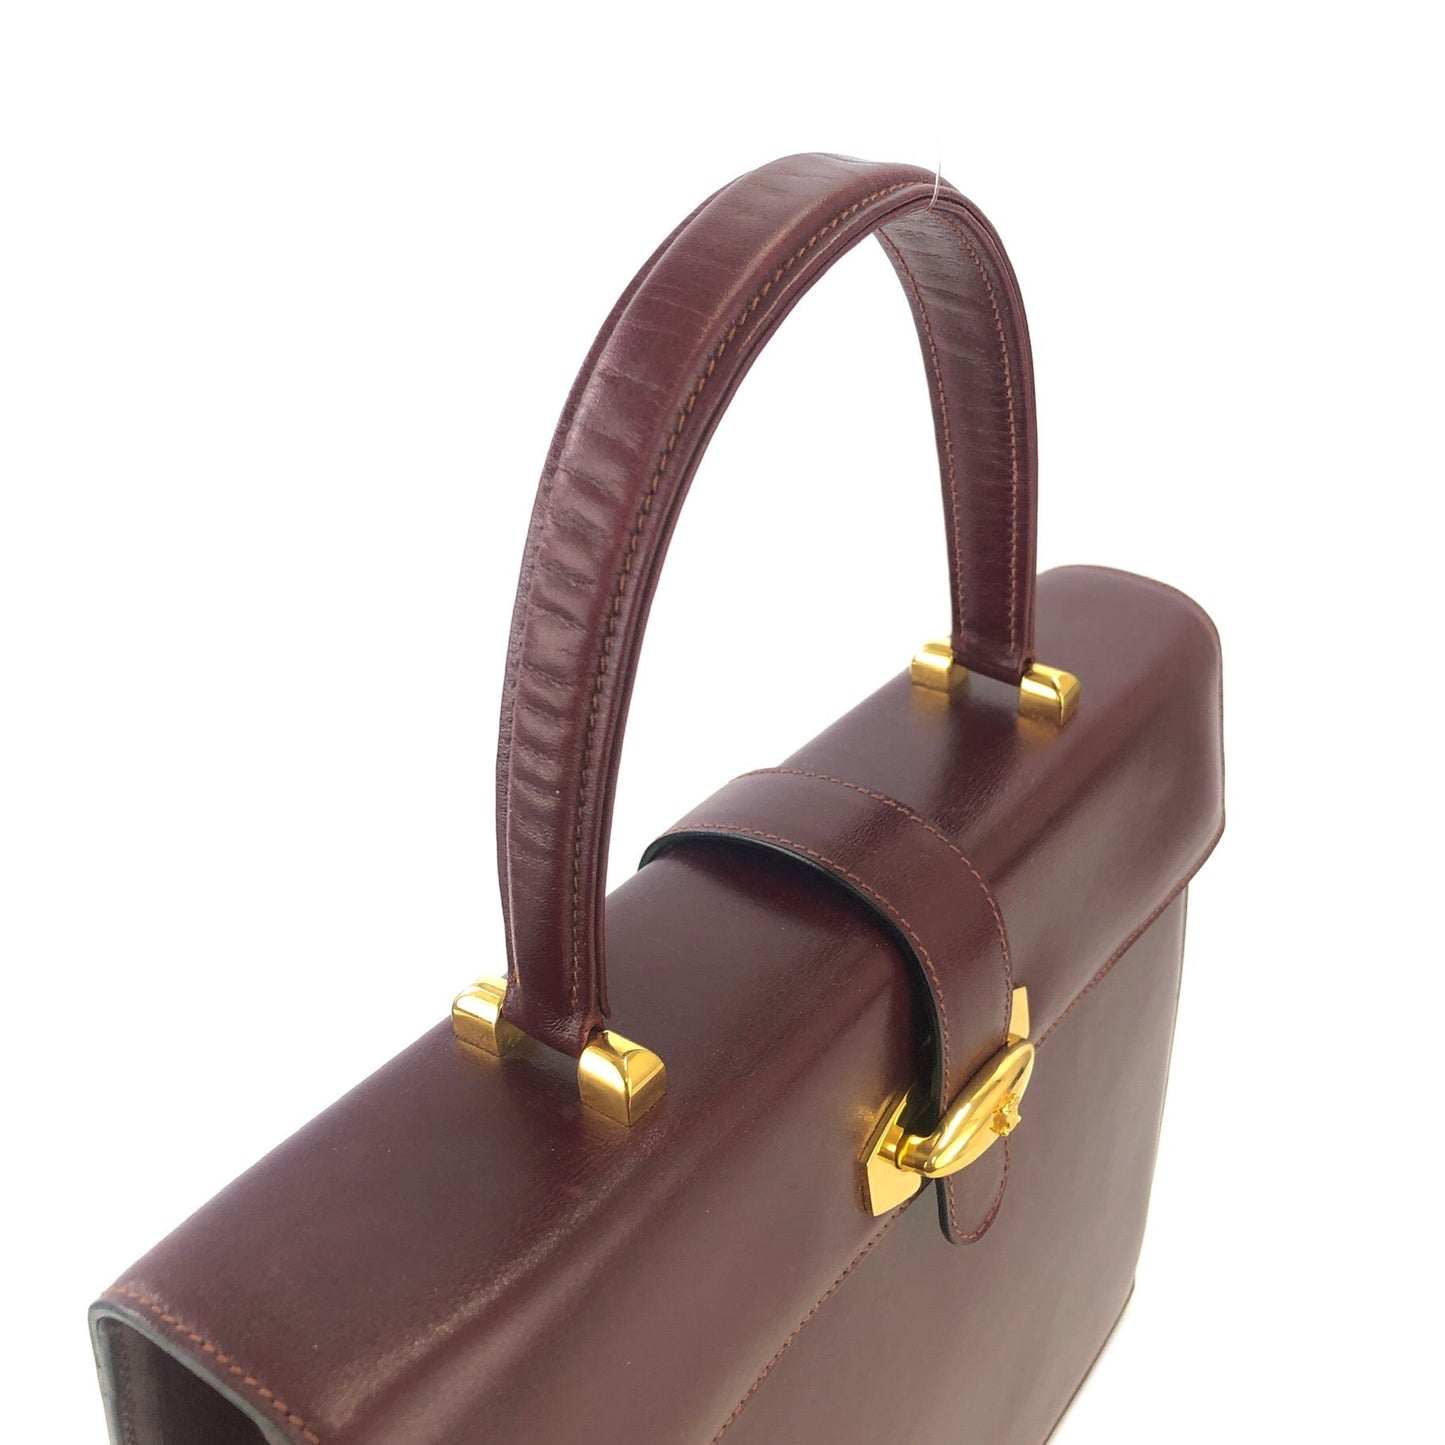 CELINE Blason Top handle Handbag Bordeaux Vintage Old Celine 2jsv3e